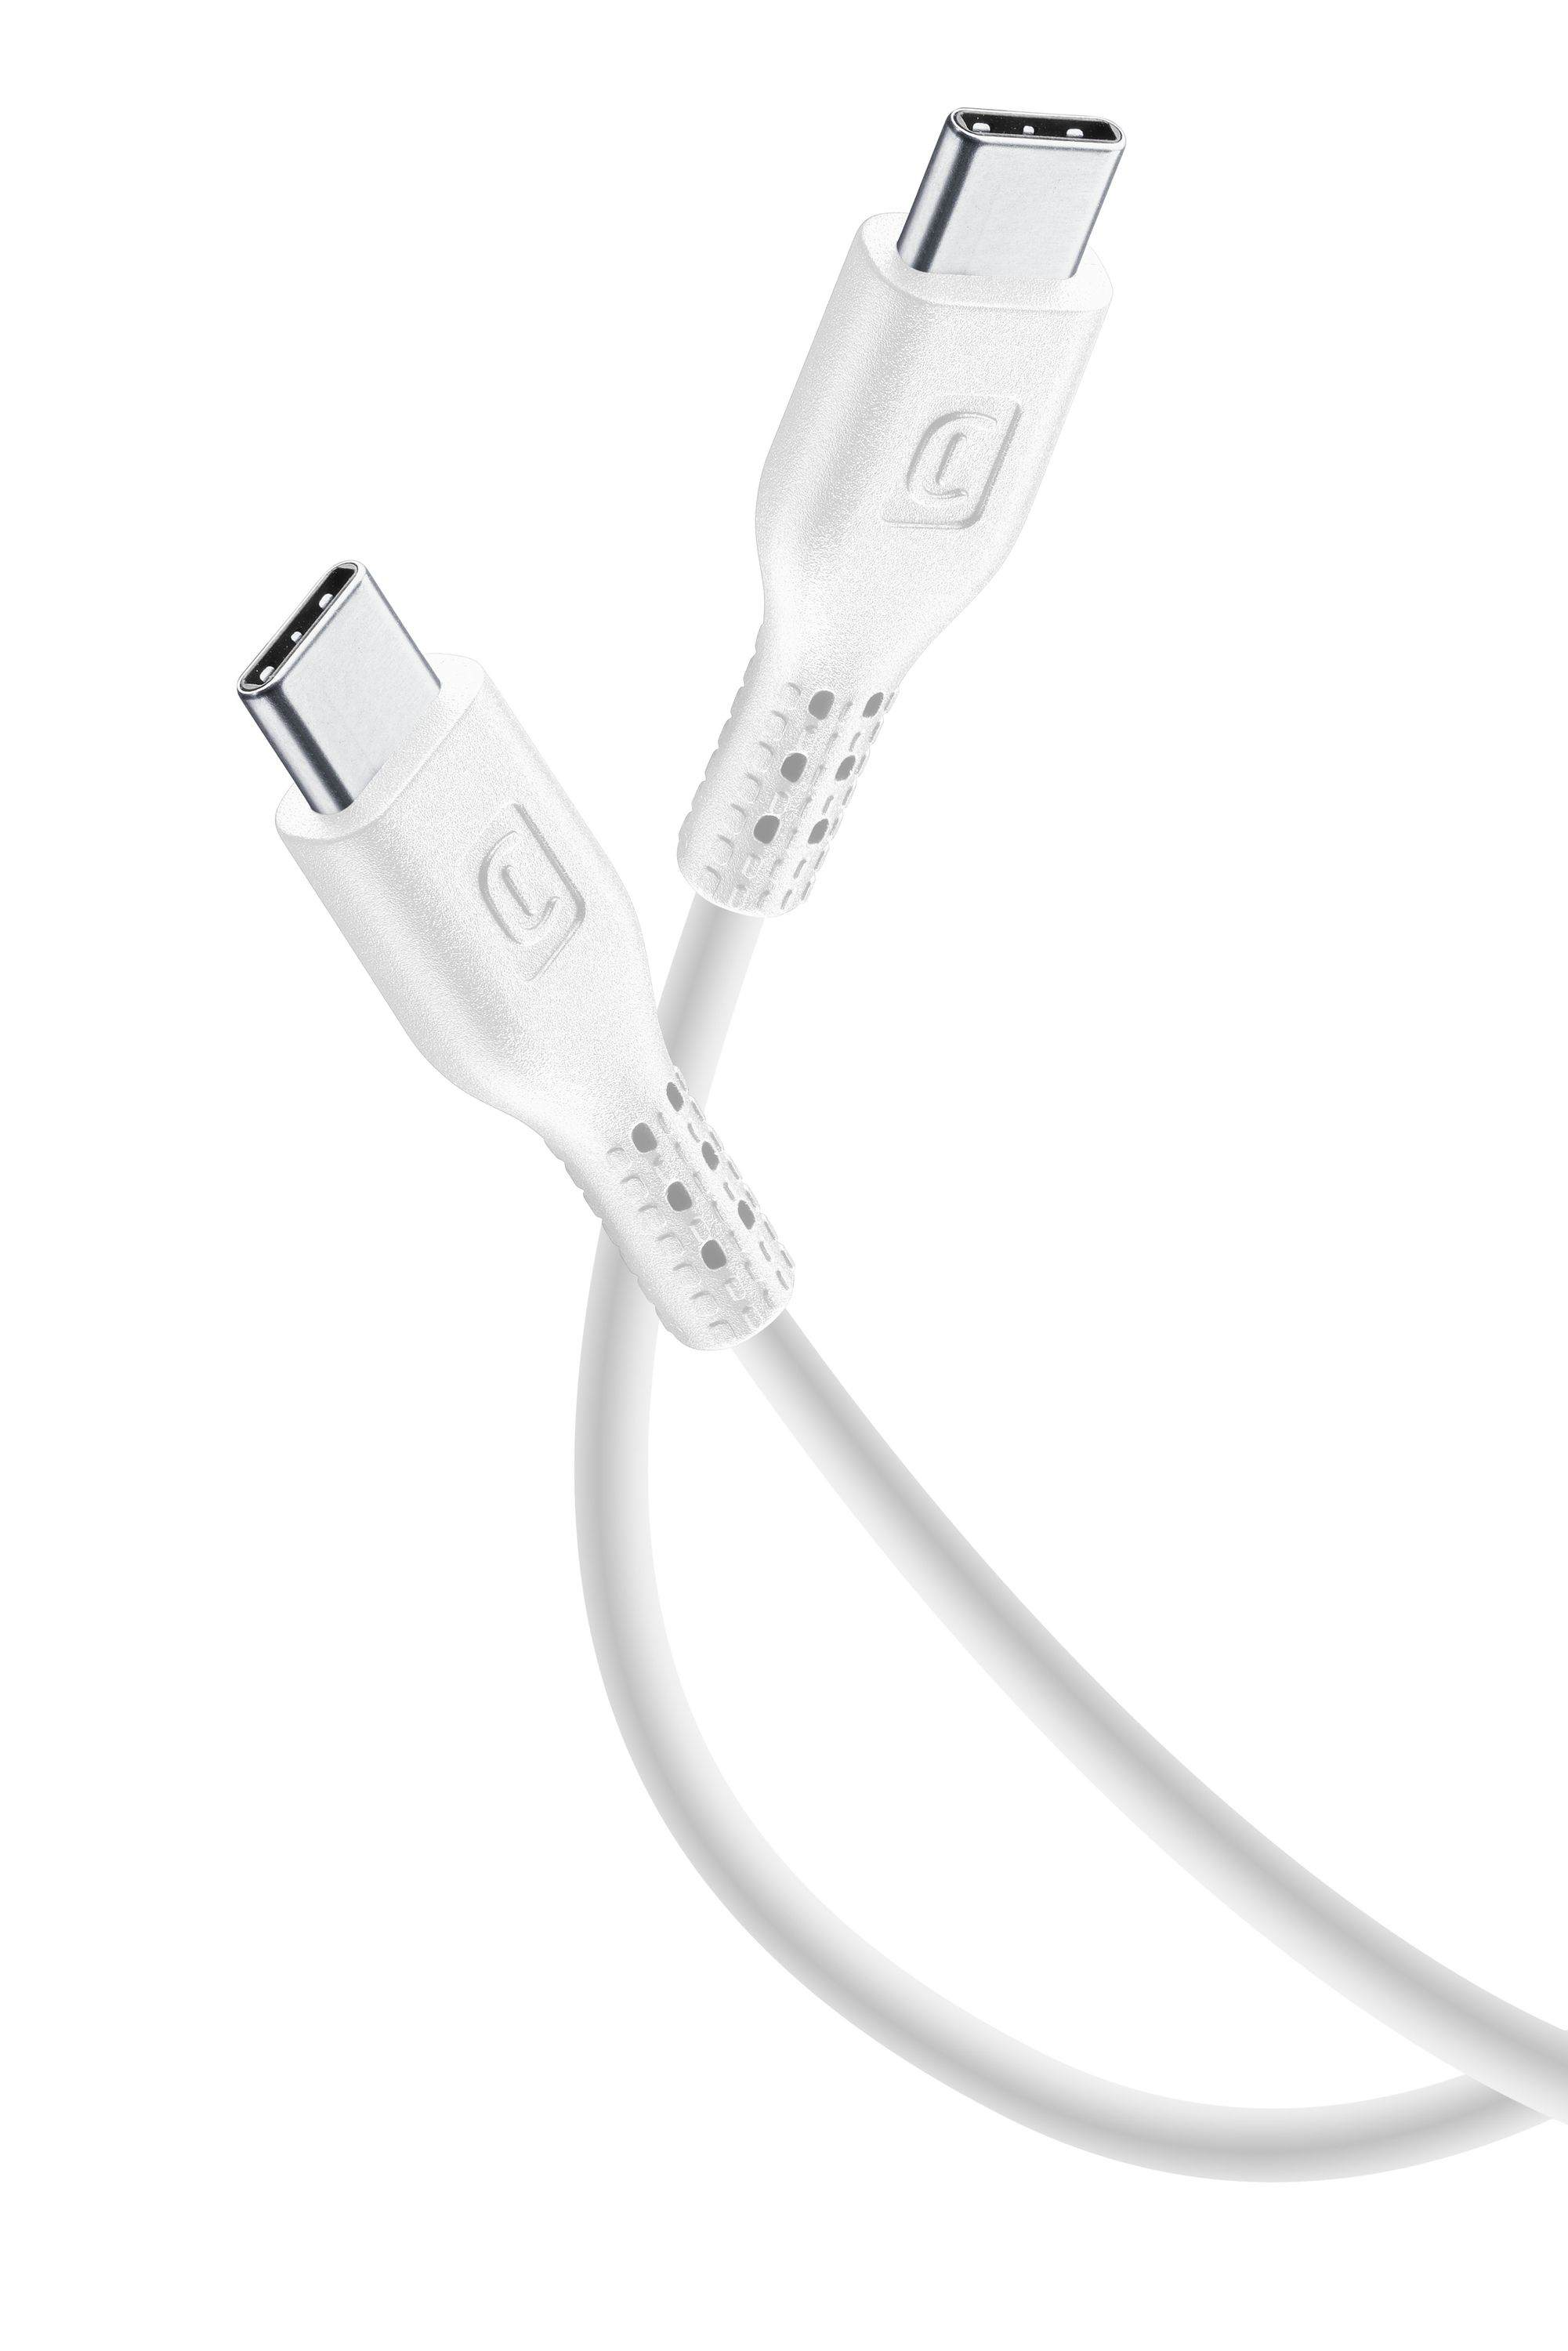 Power Cable 120cm - USB-C to USB-C, Cavi, Ricarica e Utilità